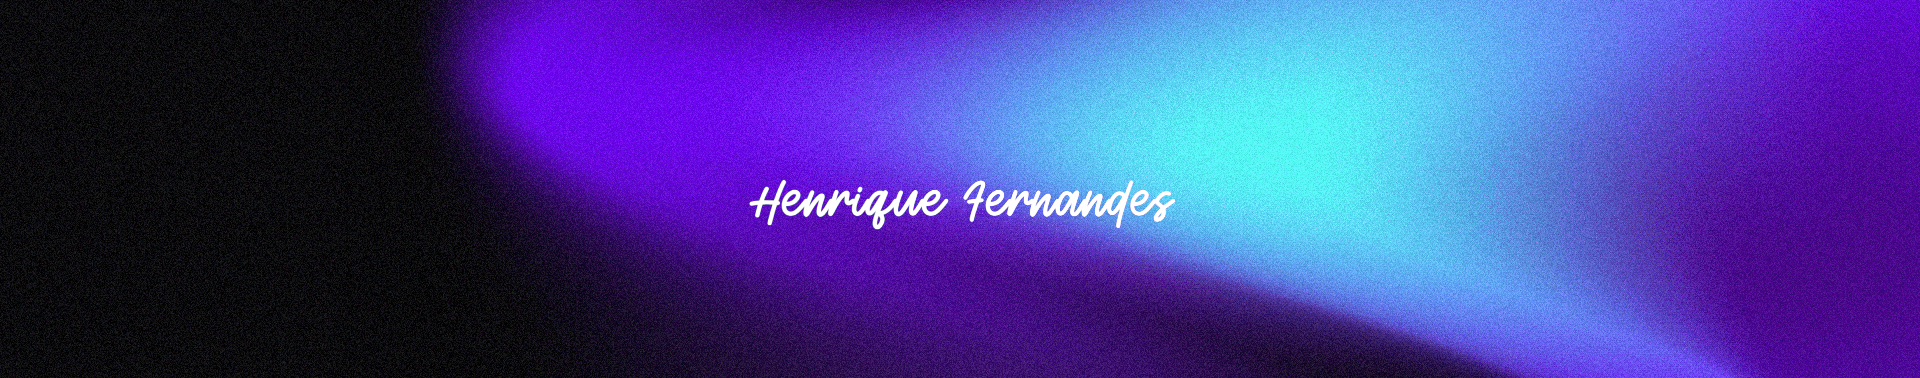 Henrique Fernandes's profile banner